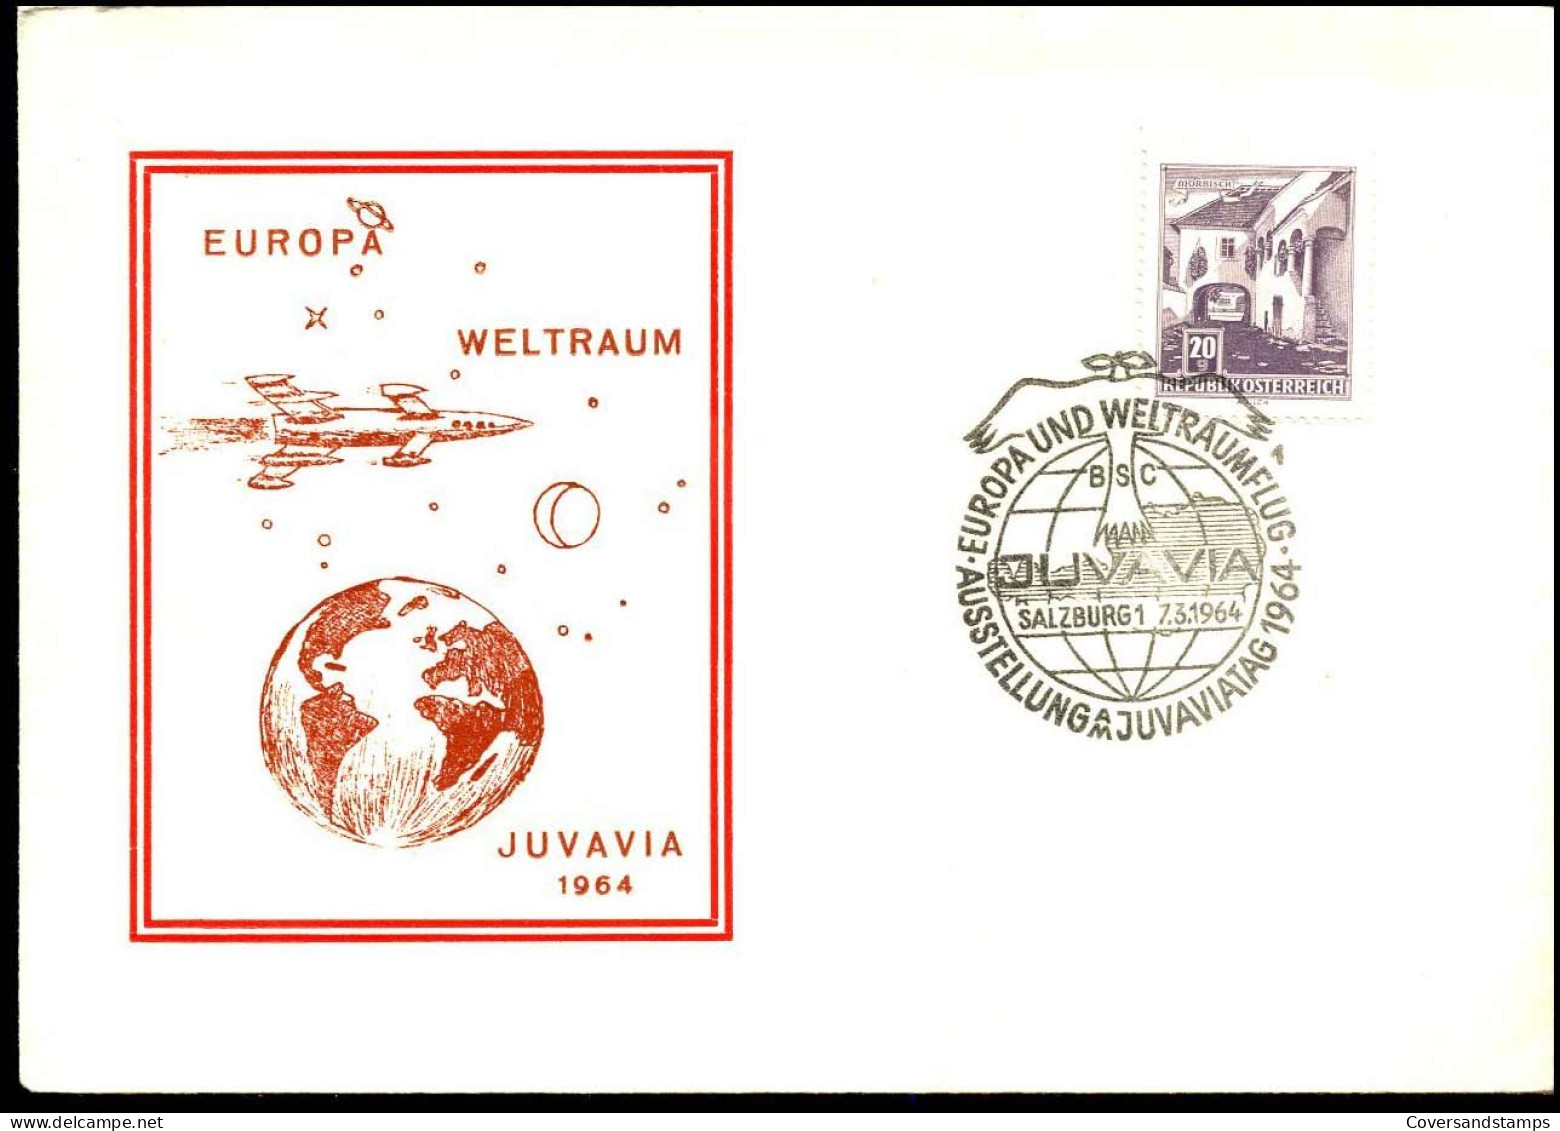 FDC - Europa Weltraum Juvavia 1964 - FDC